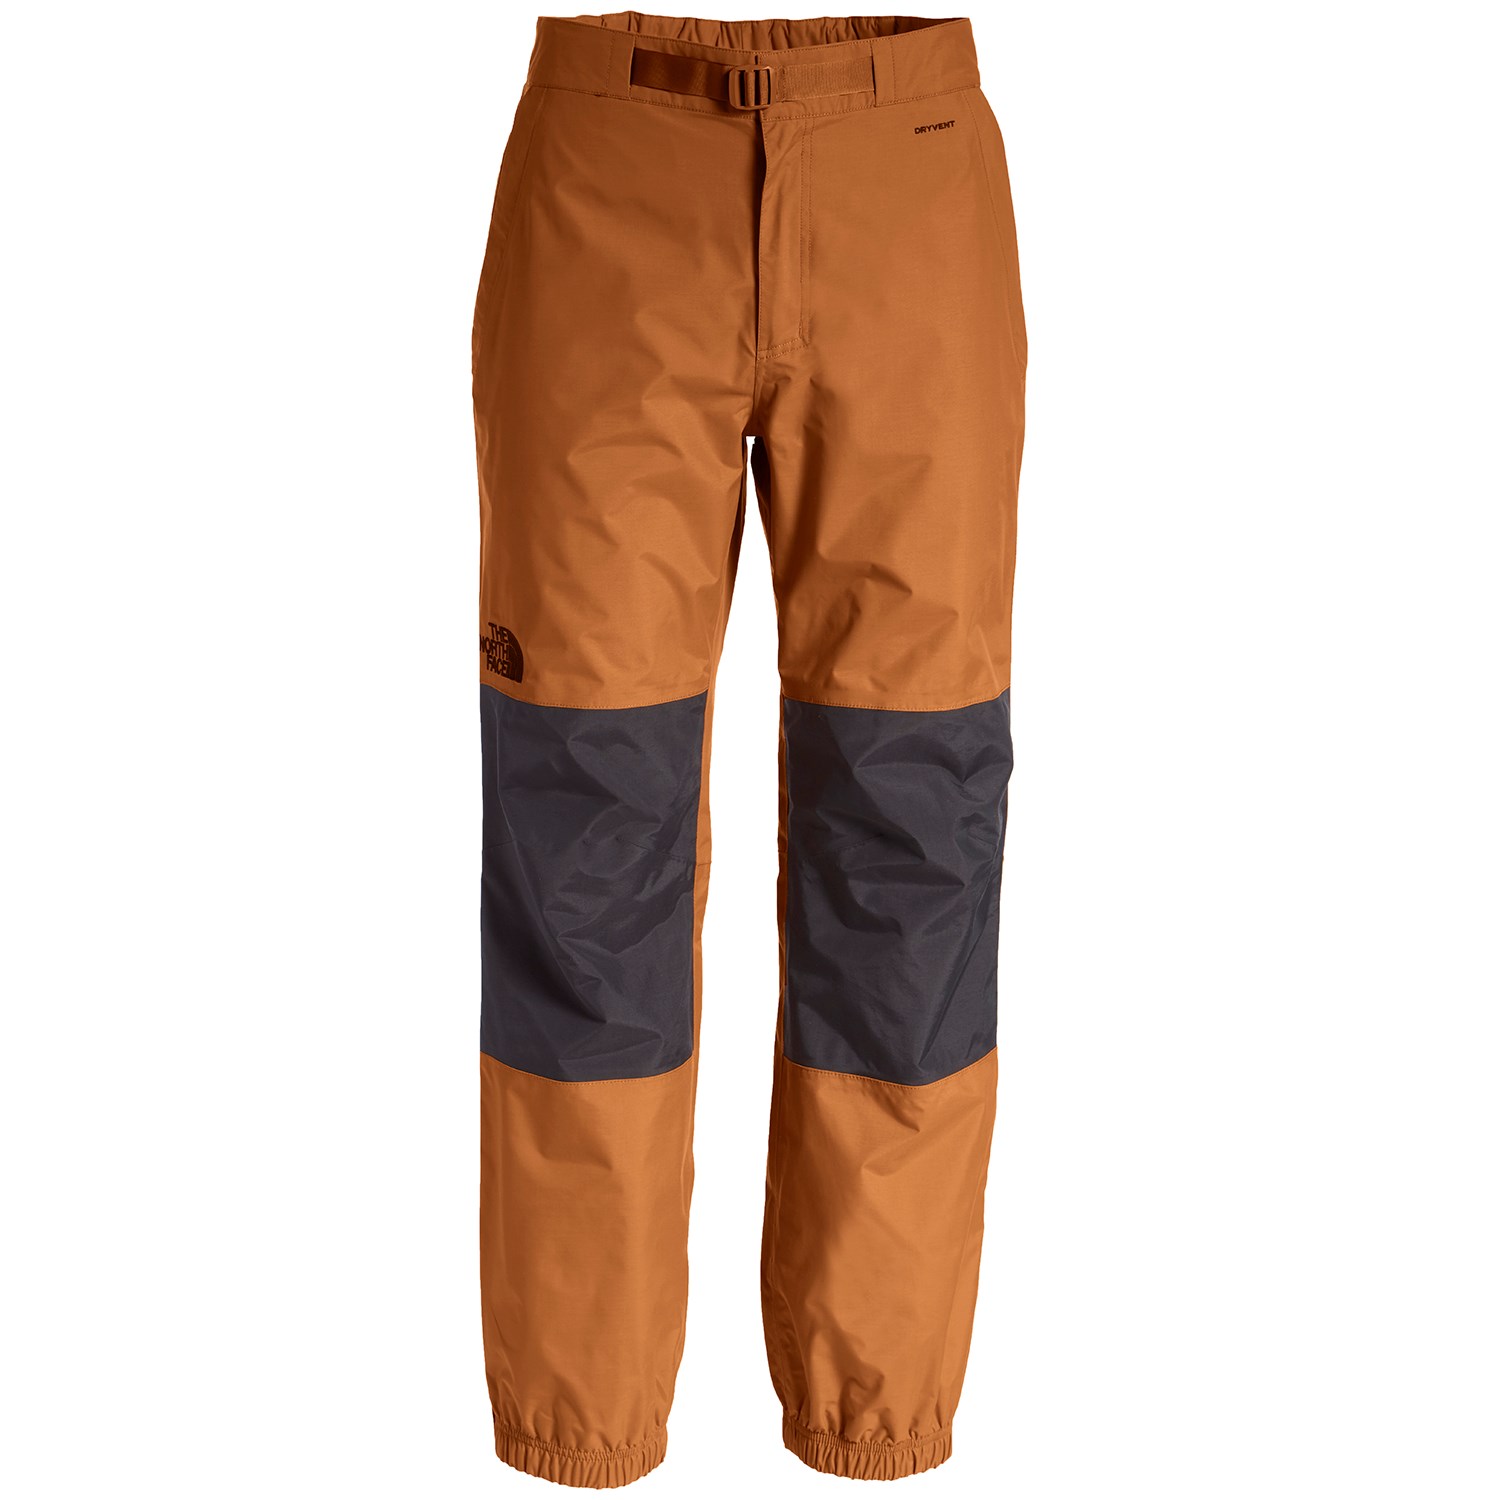 north face orange pants